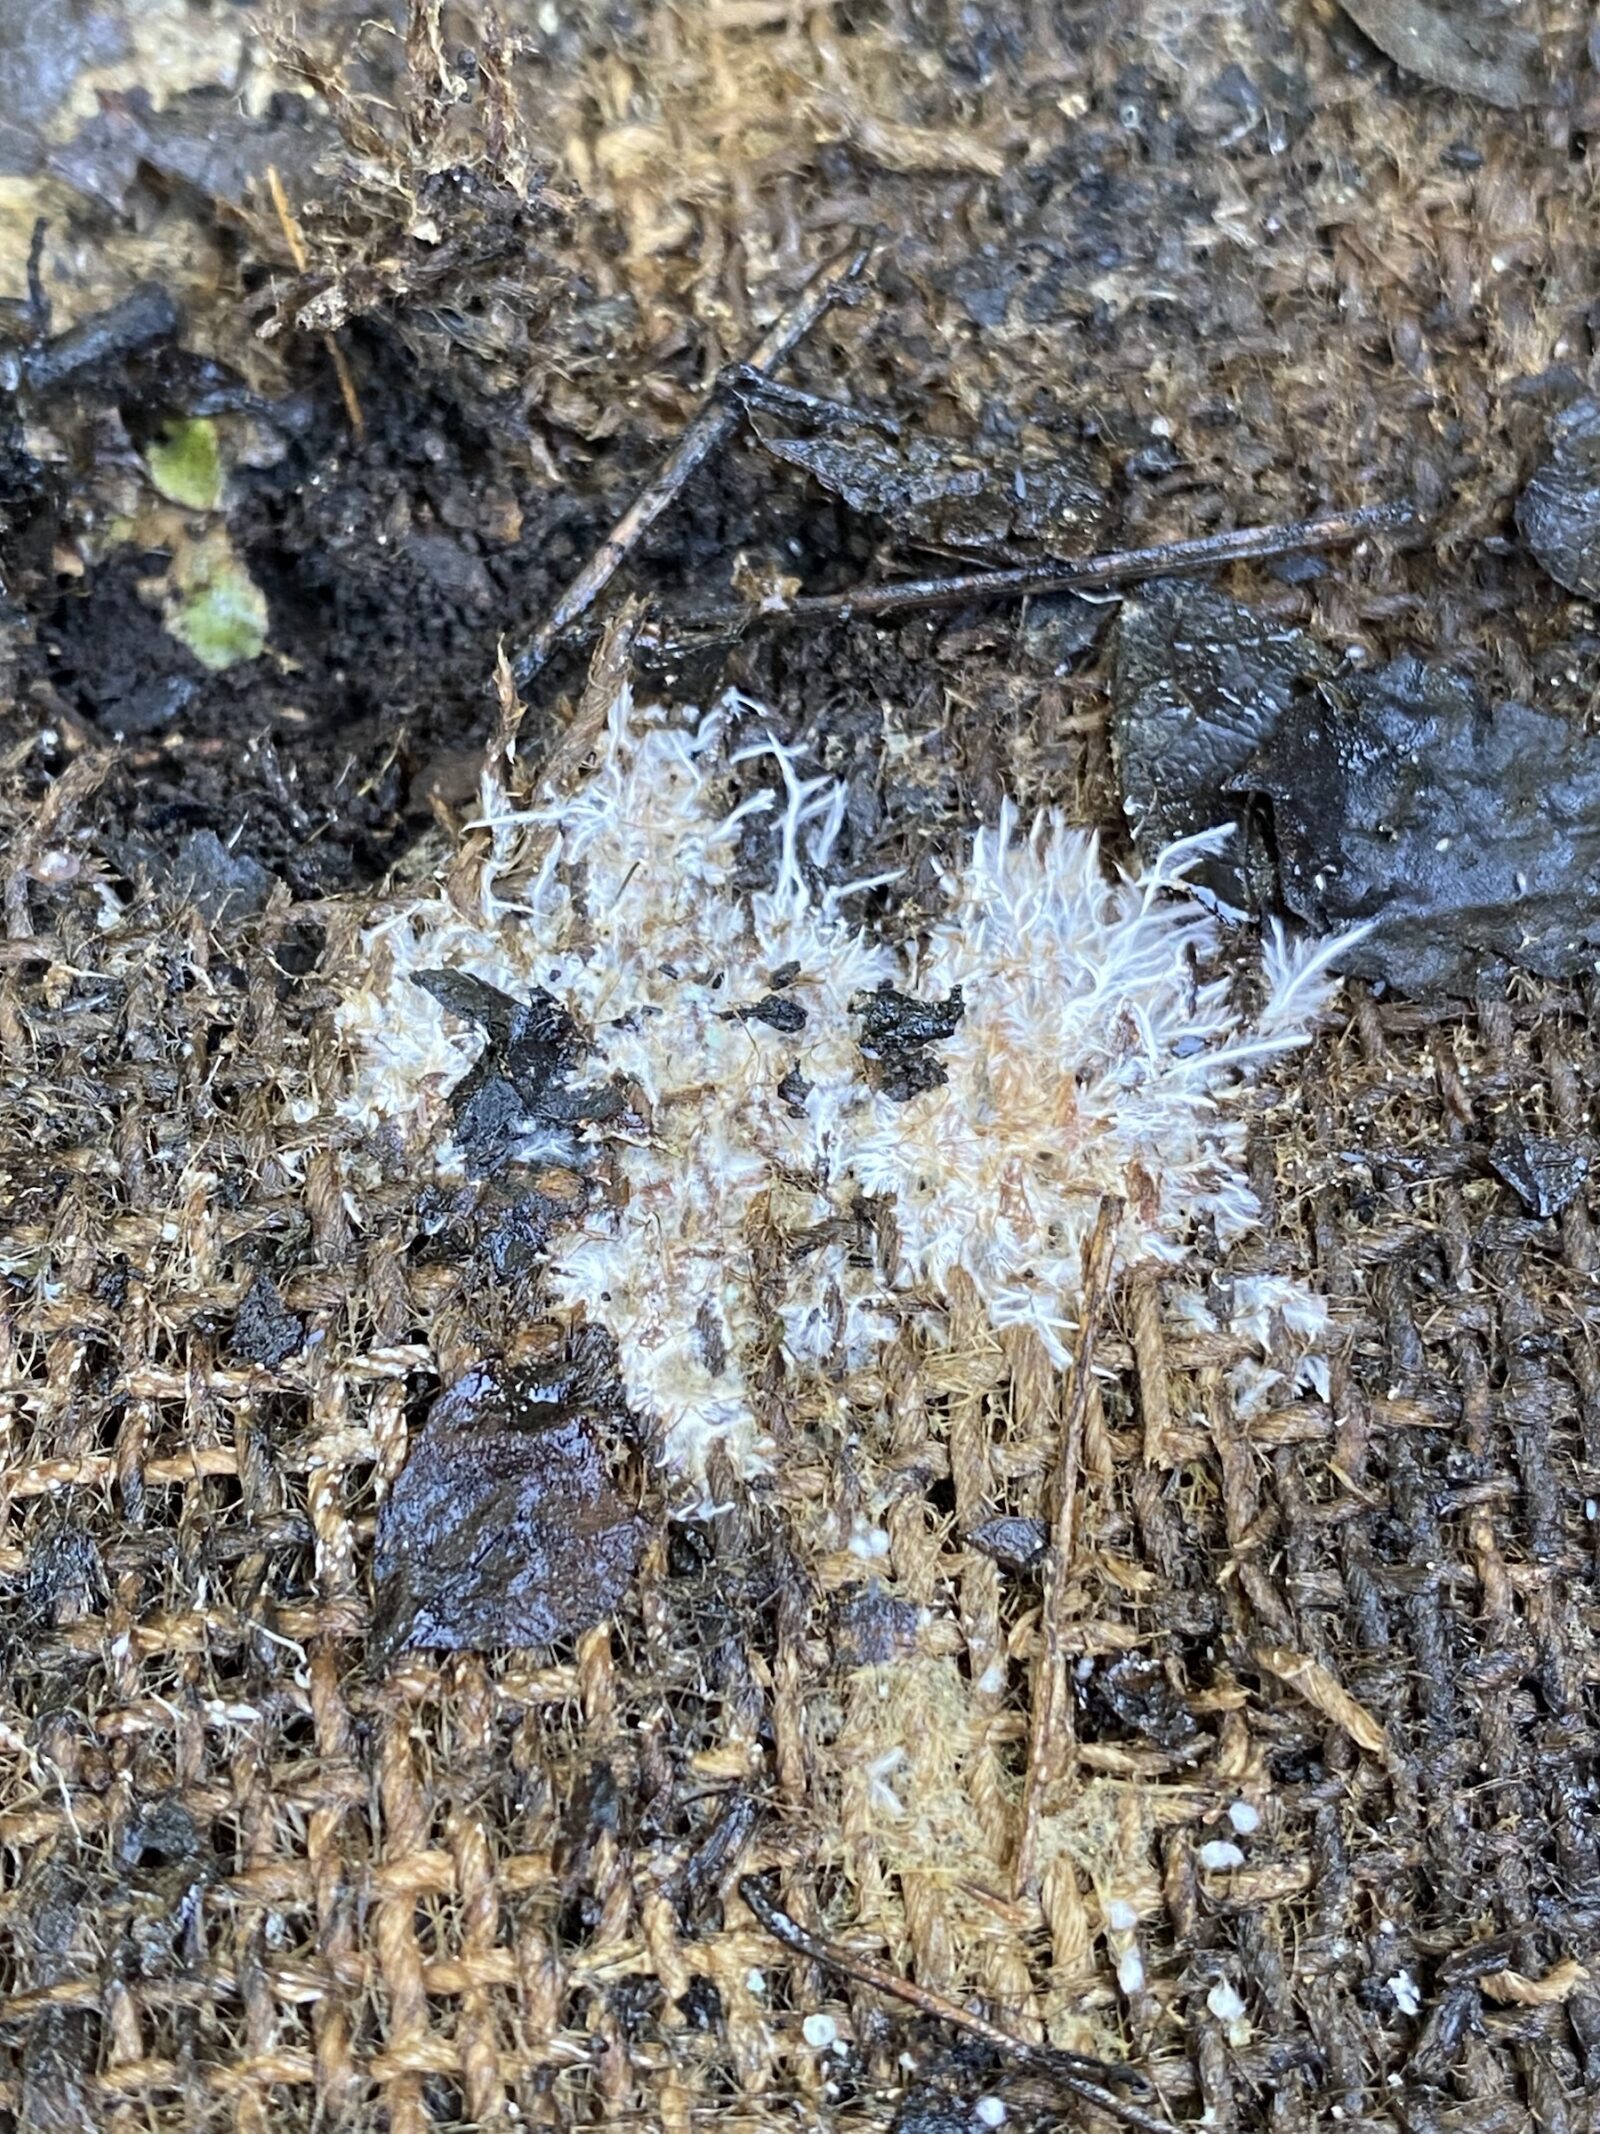 The humble hessian sack meets mycelium